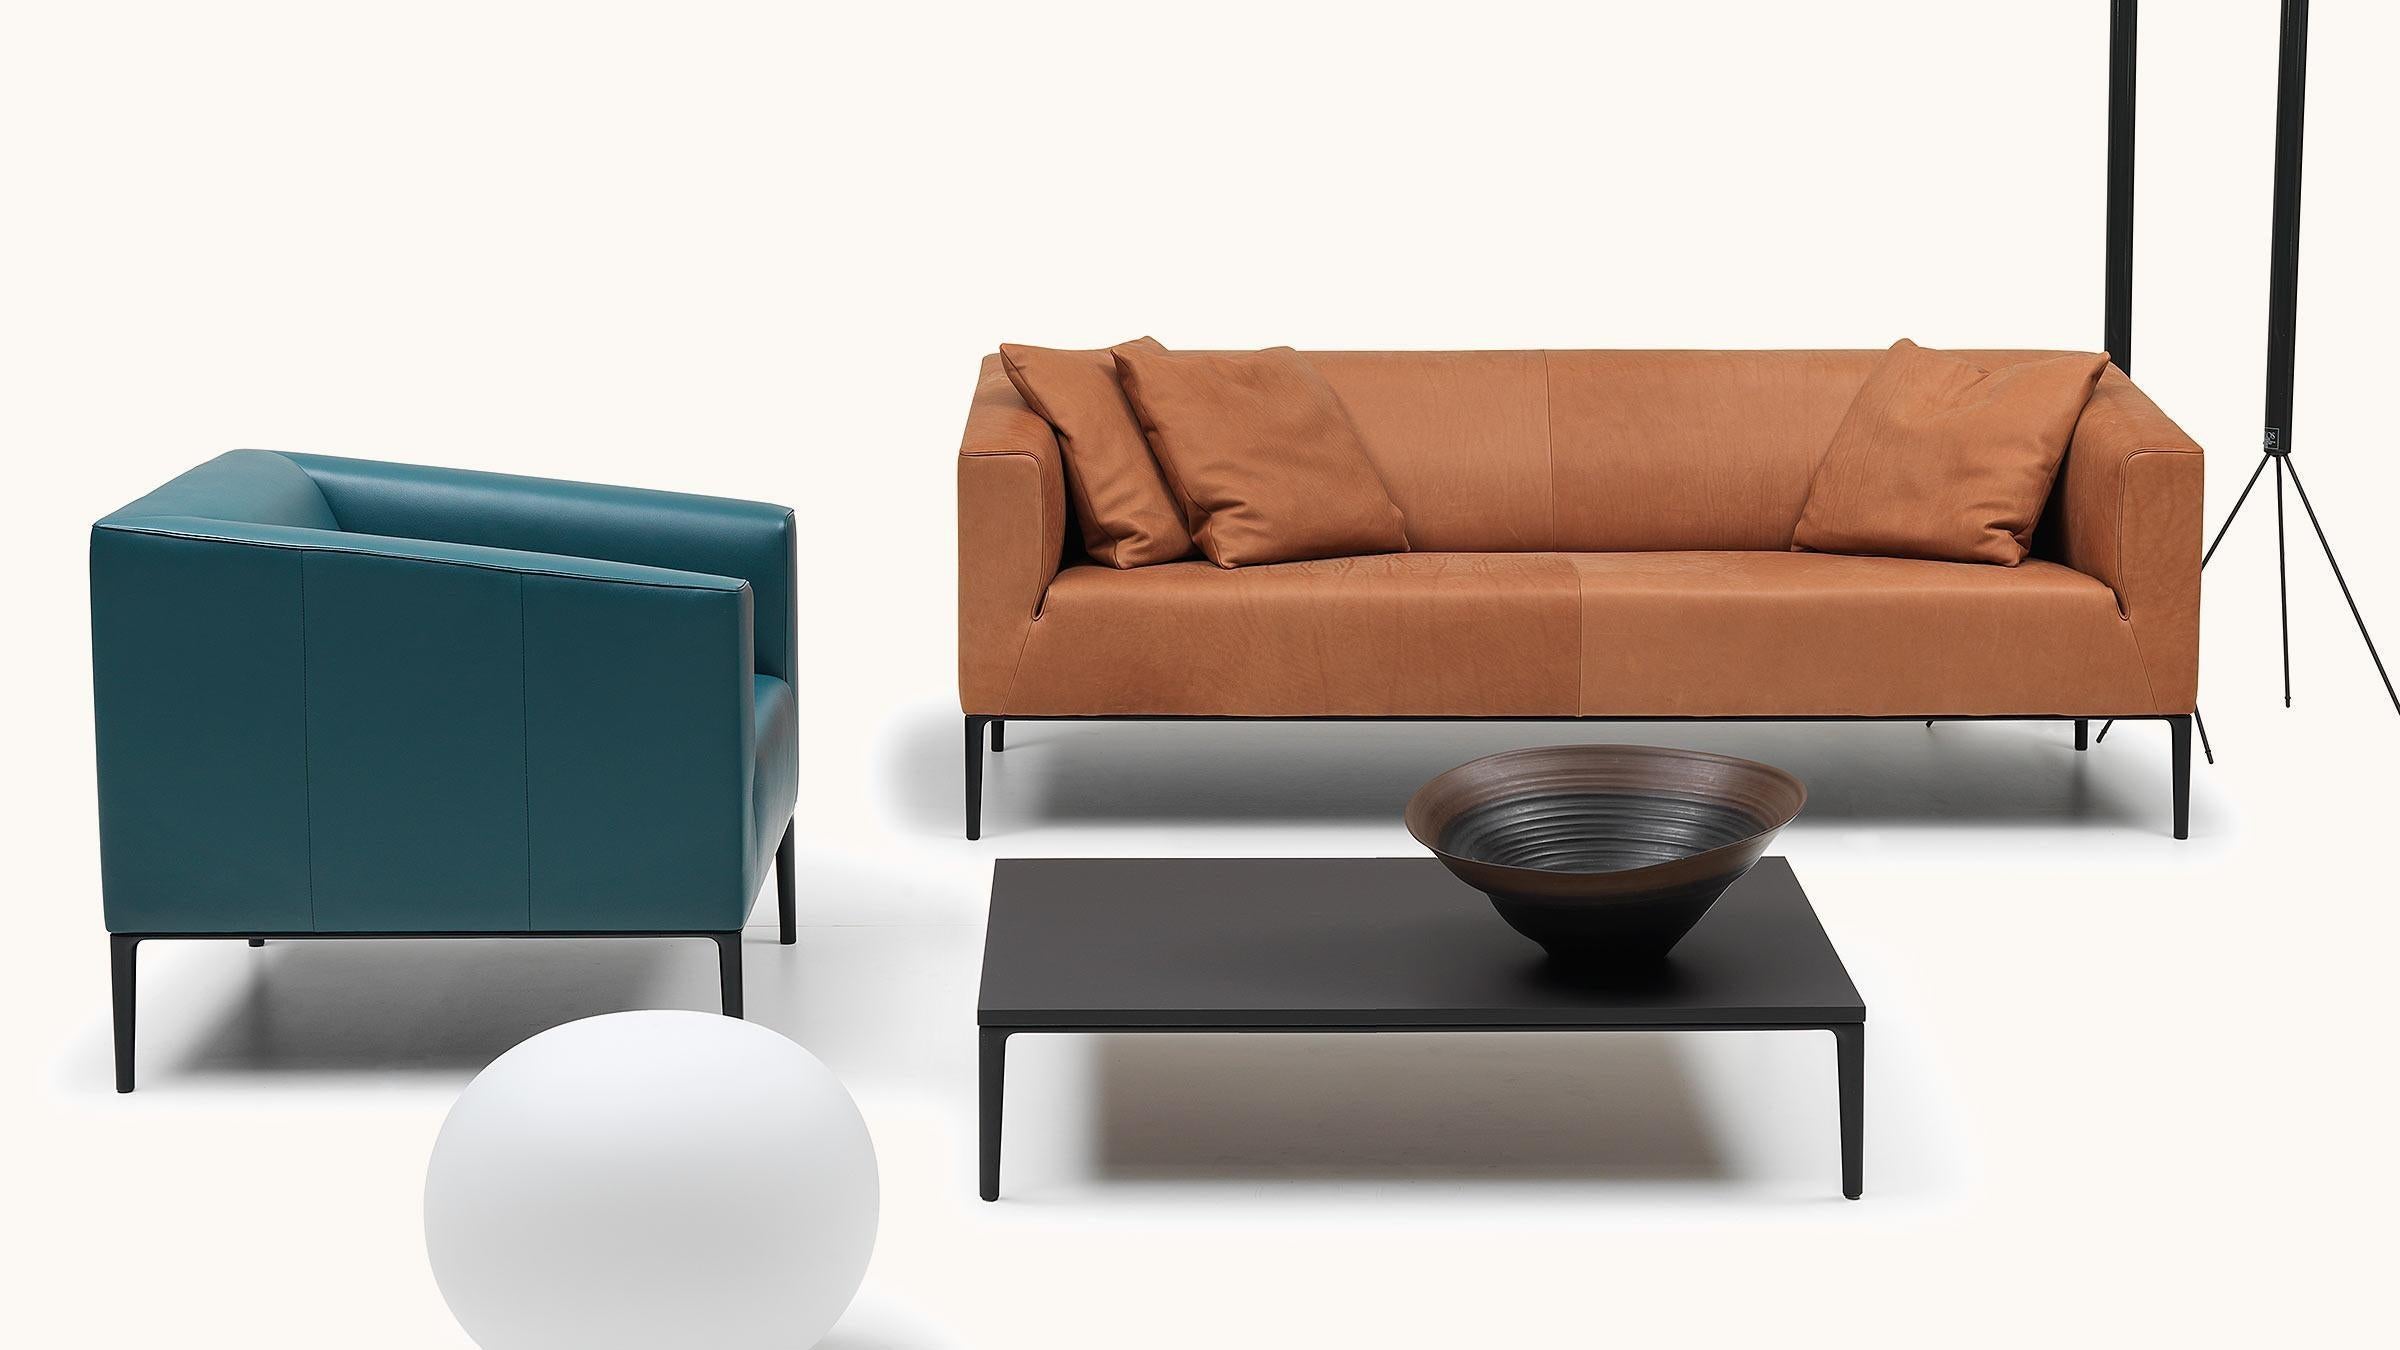 Swiss De Sede DS-161 Two-Seat Sofa in Hazel Brown Upholstery by De Sede Design Team For Sale